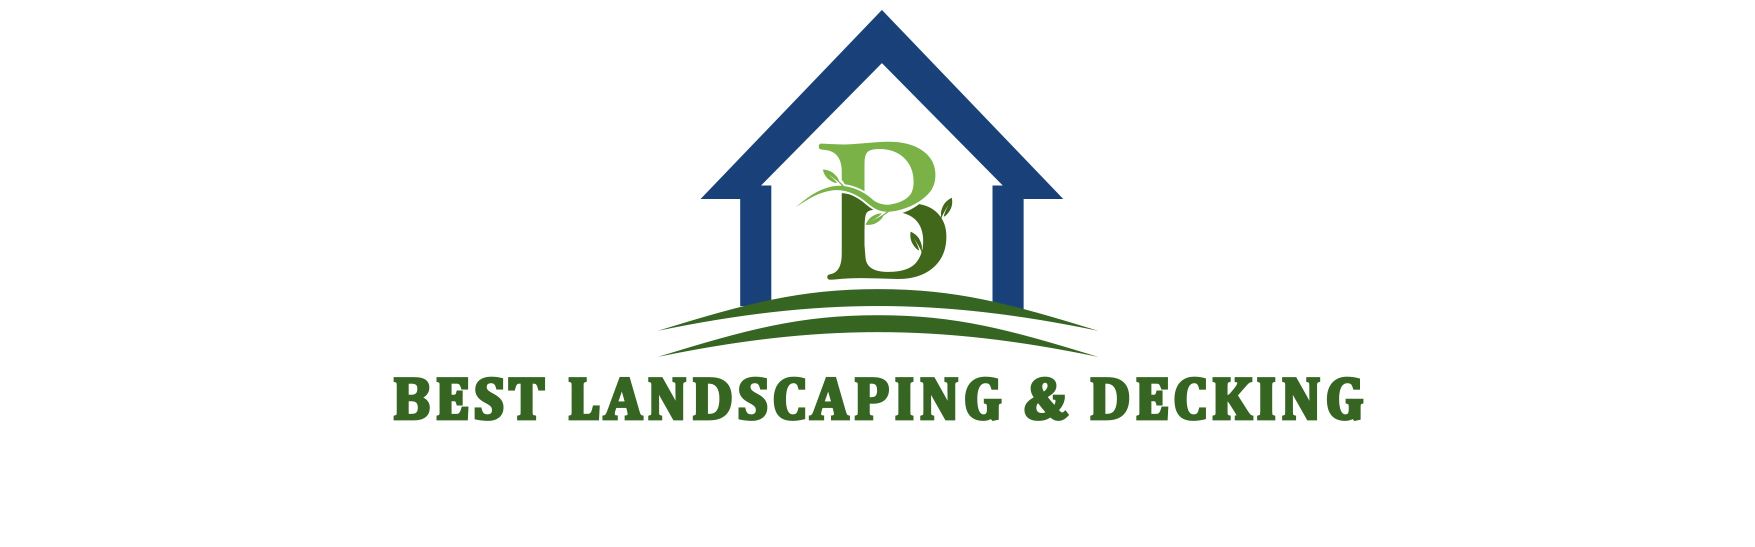 Best Landscaping & Decking